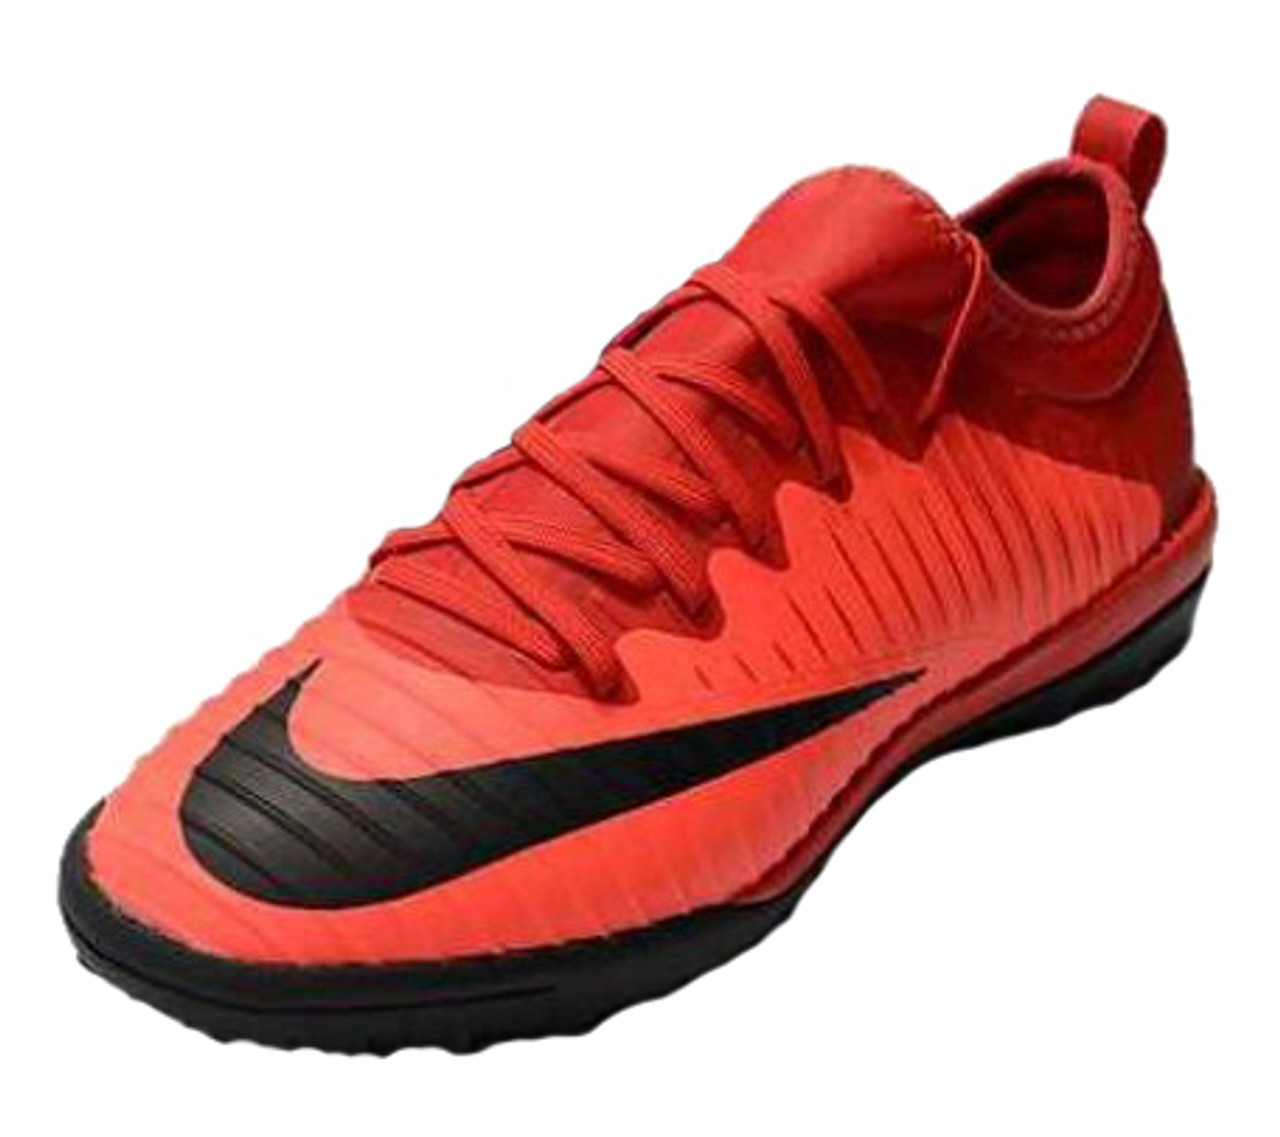 Nike MercurialX Finale II TF - University Red/Black SD (103120) - ohp soccer